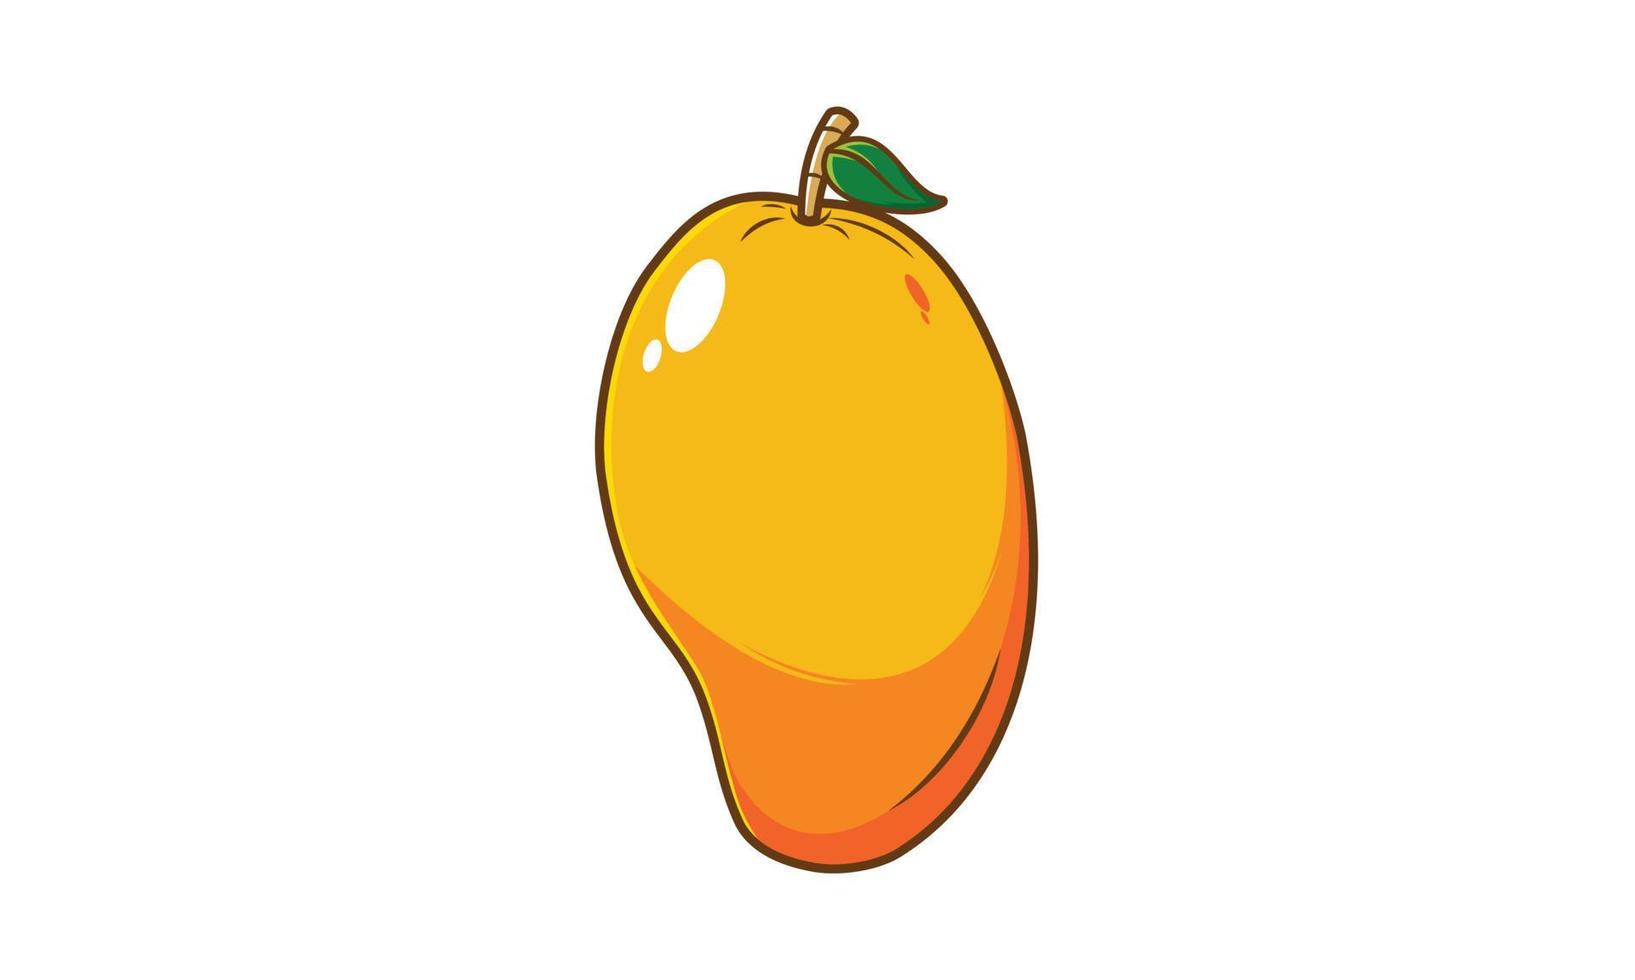 Mango-Frucht-Vektor-Illustration-design vektor